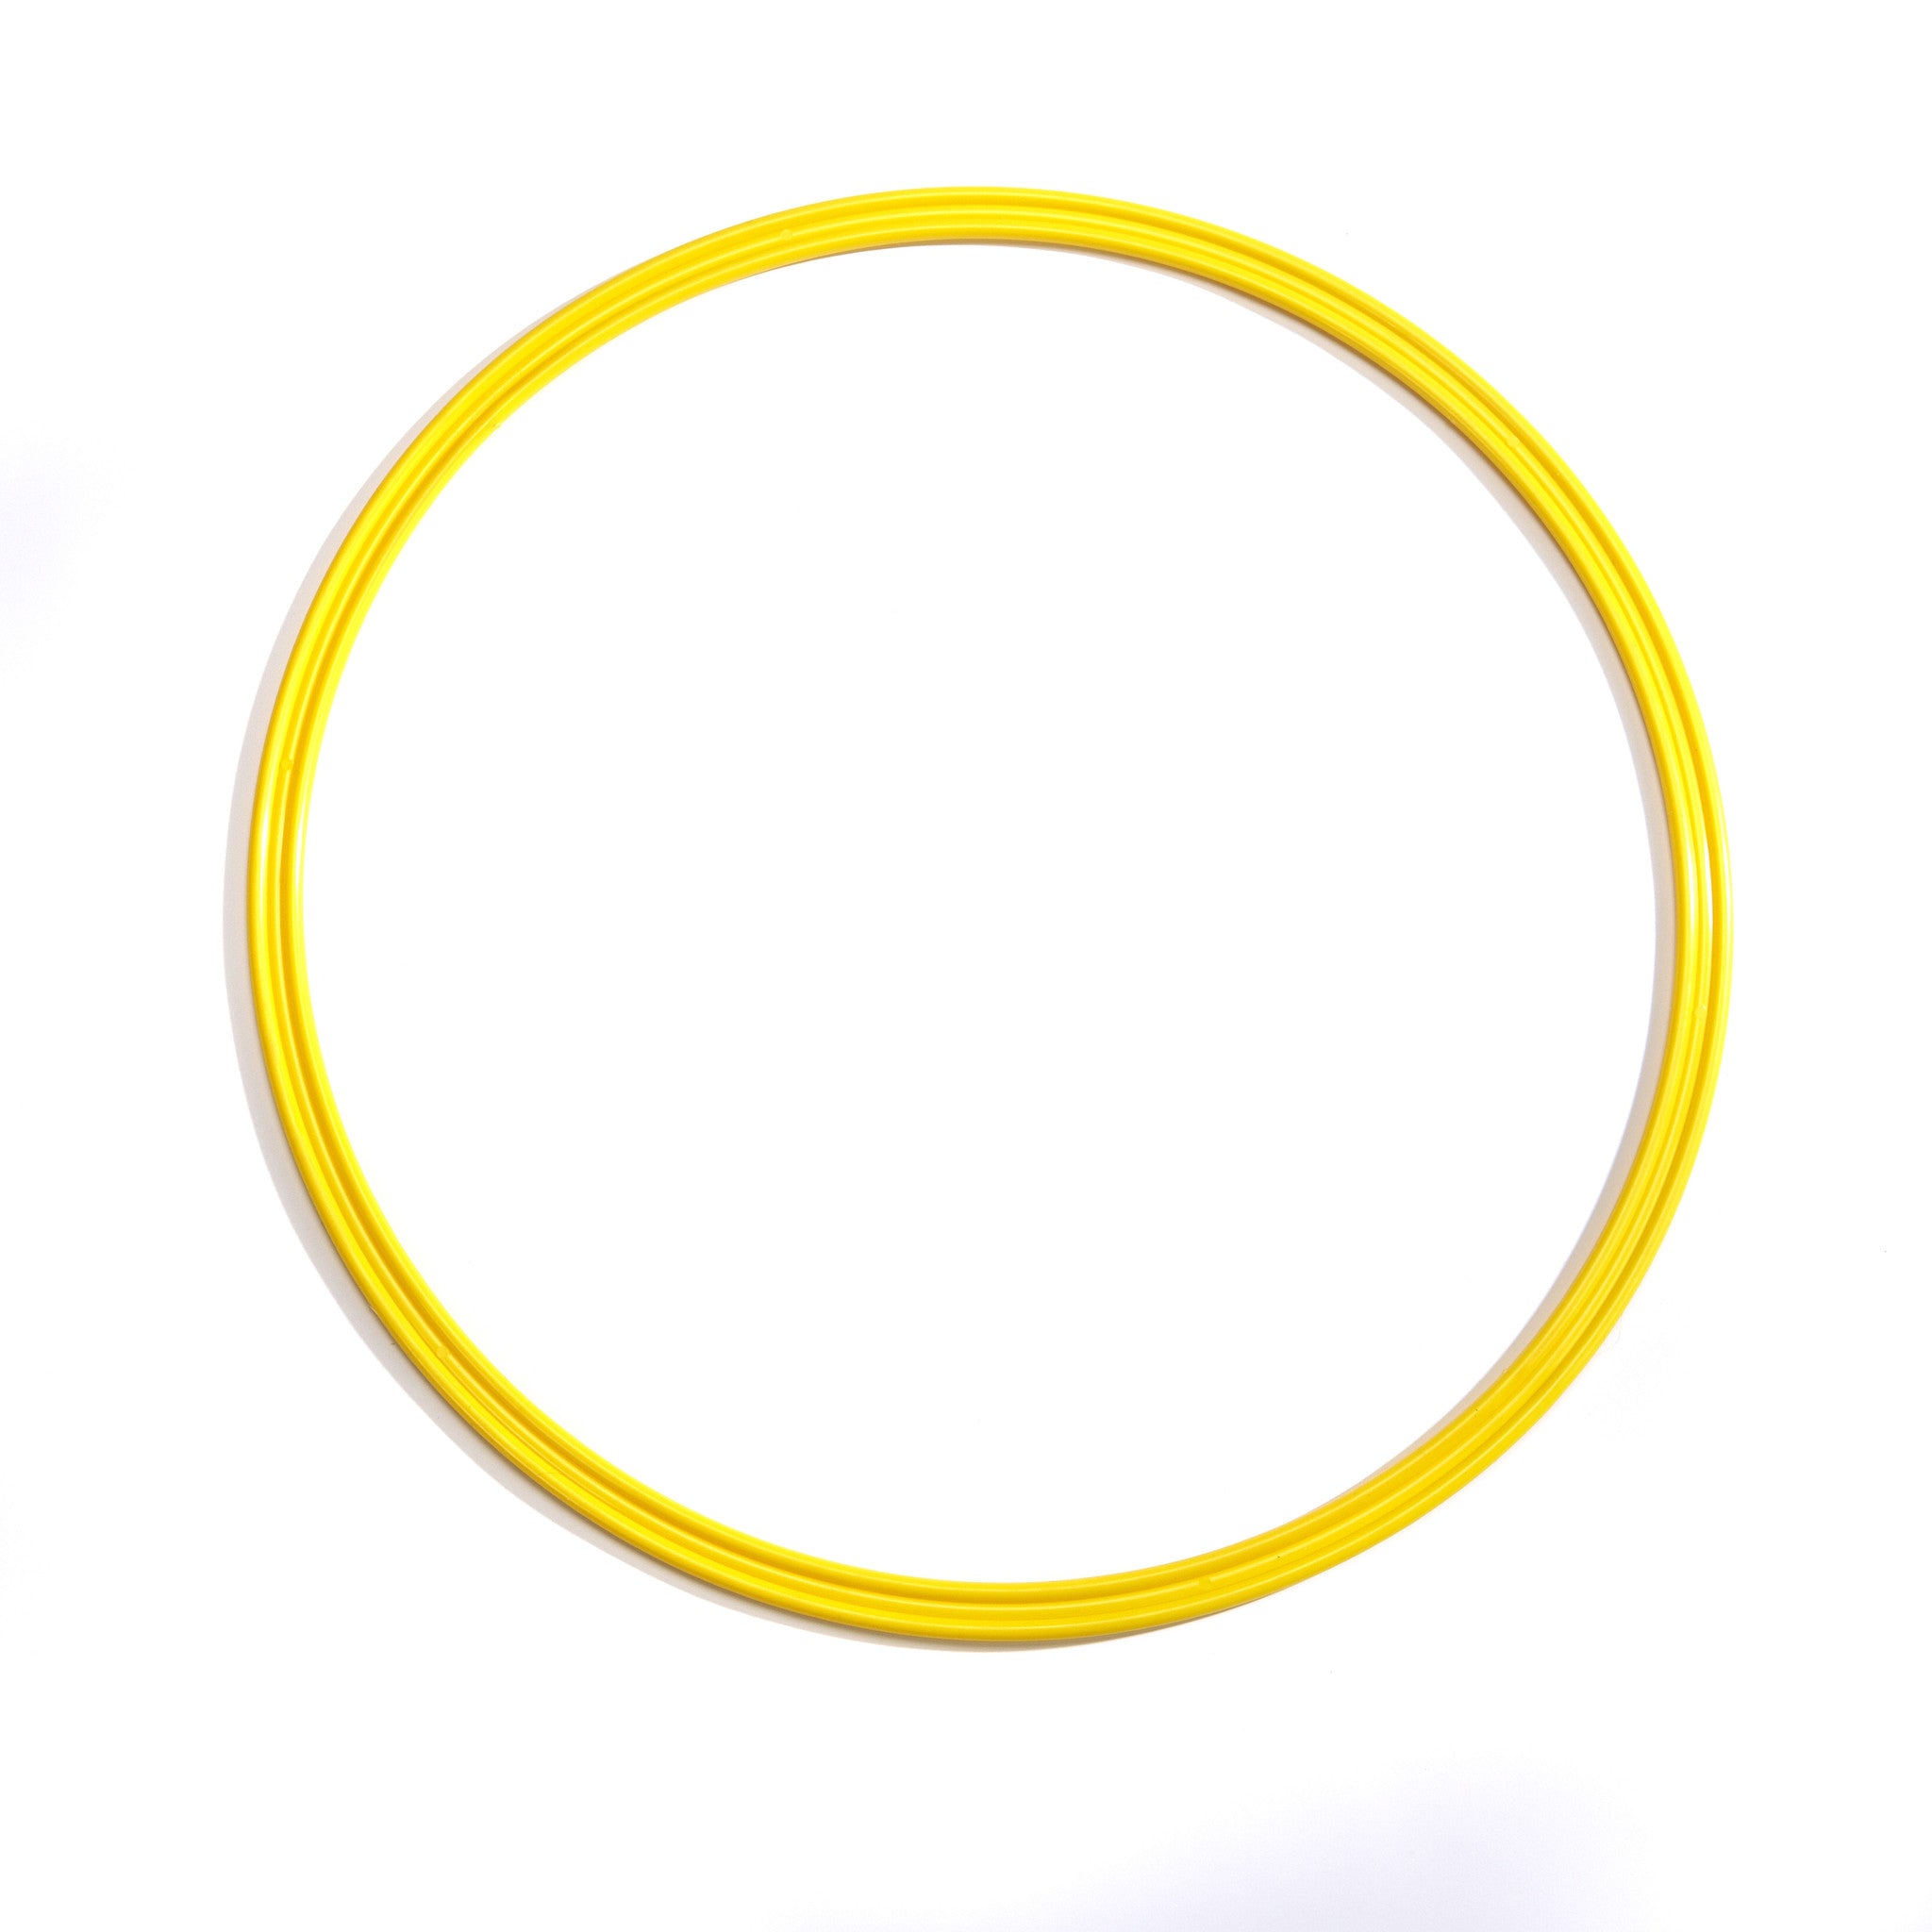 Large yellow 50cm flat hoop for sports coaching & training.